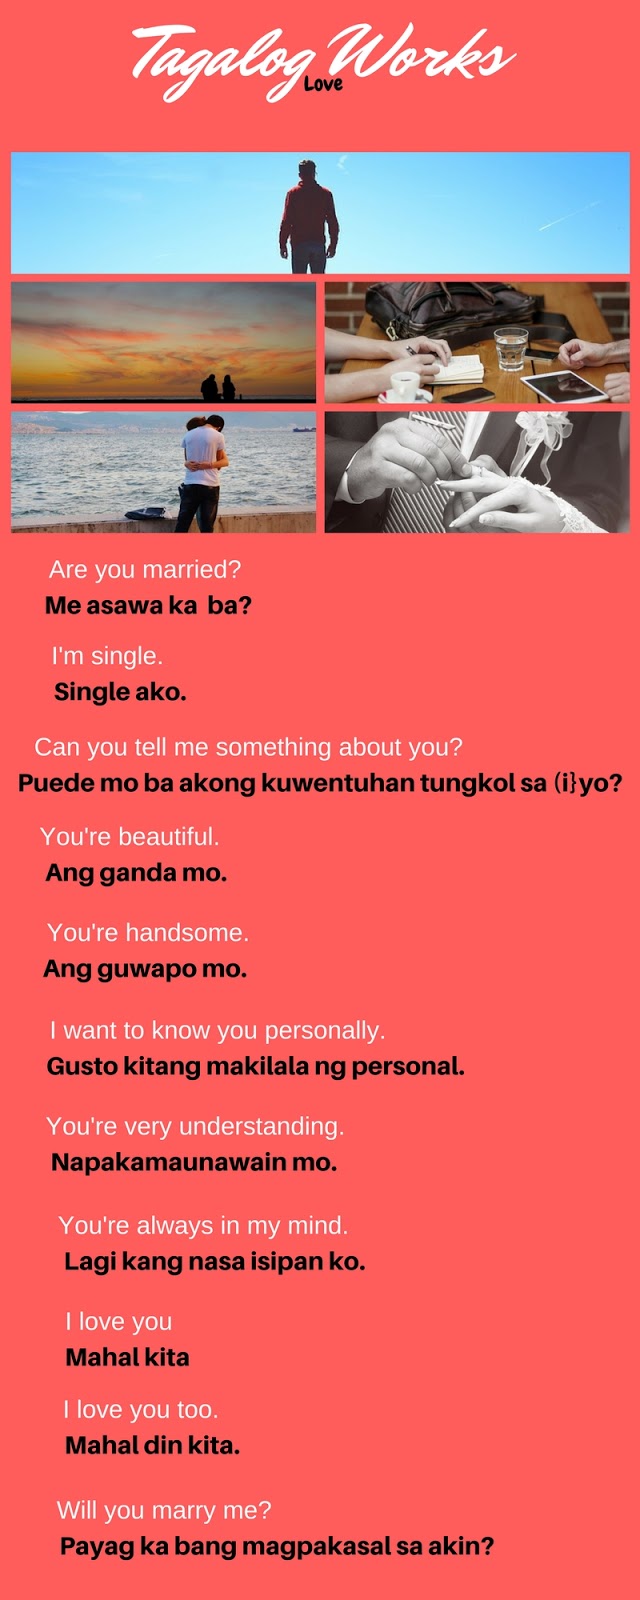 Learn Tagalog phrases: Love